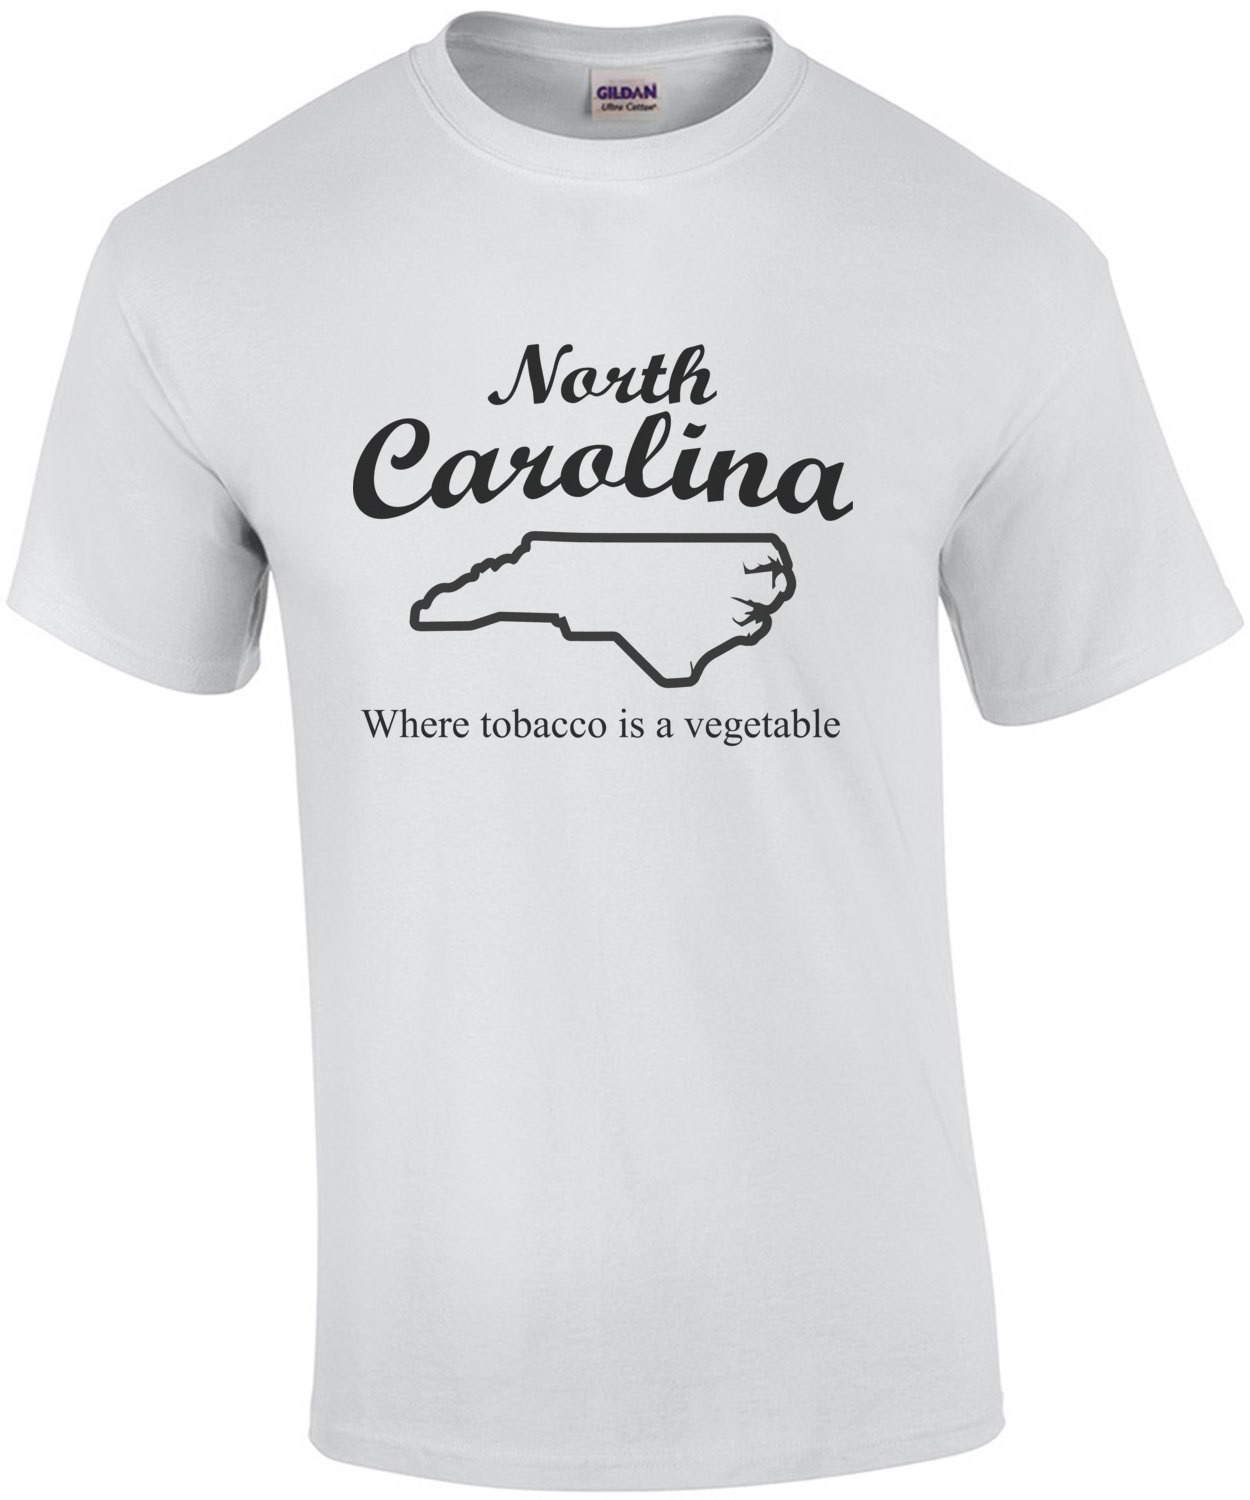 North Carolina - Where tobacco is a vegetable - North Carolina T-Shirt